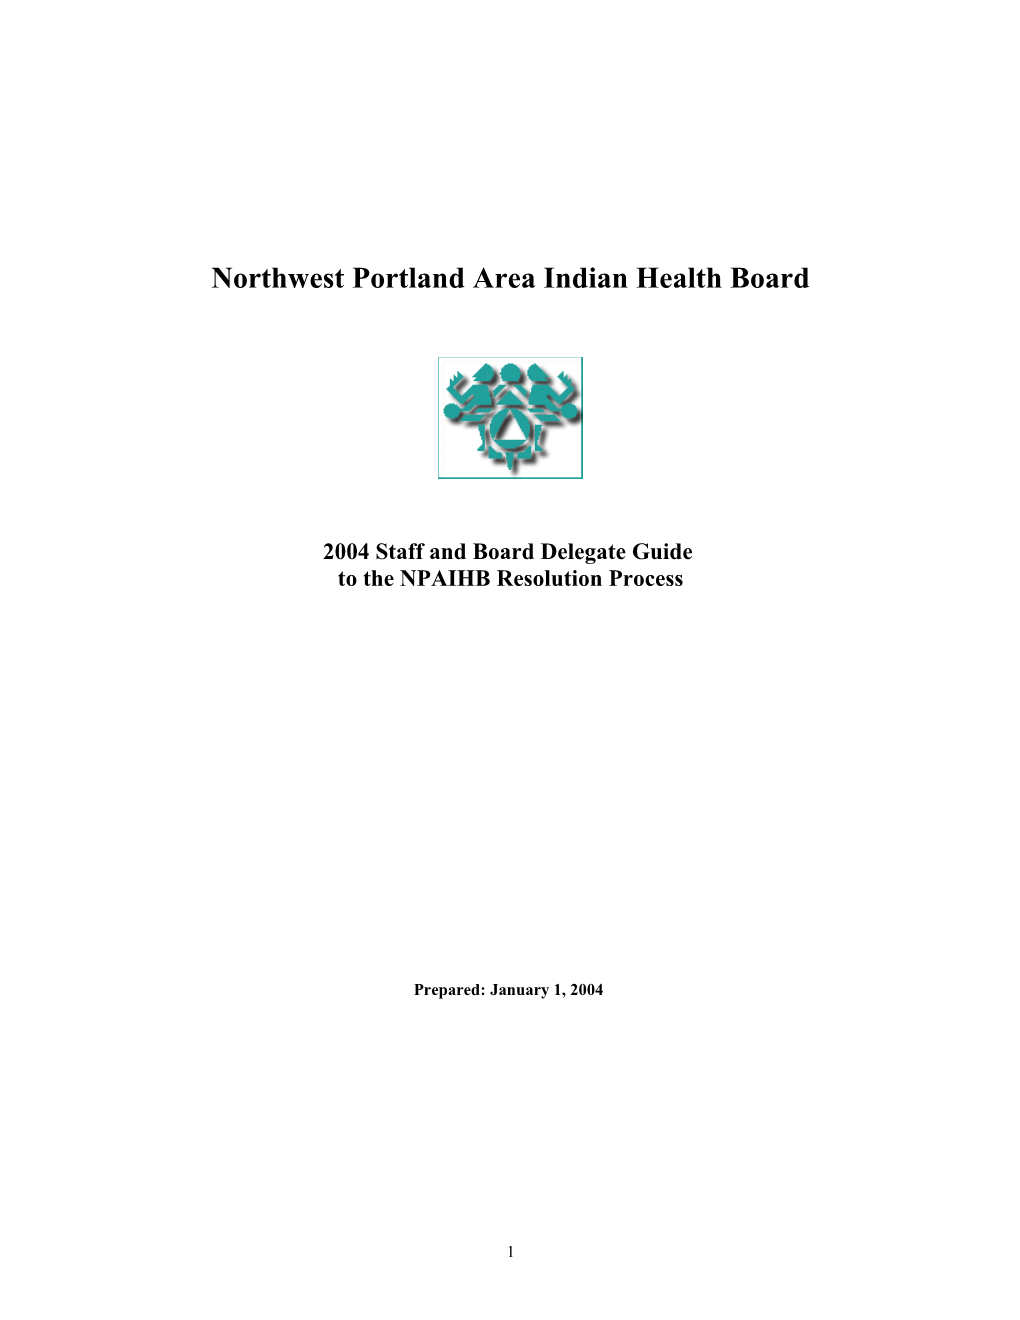 Northwest Portland Area Indian Health Board Resolution Process